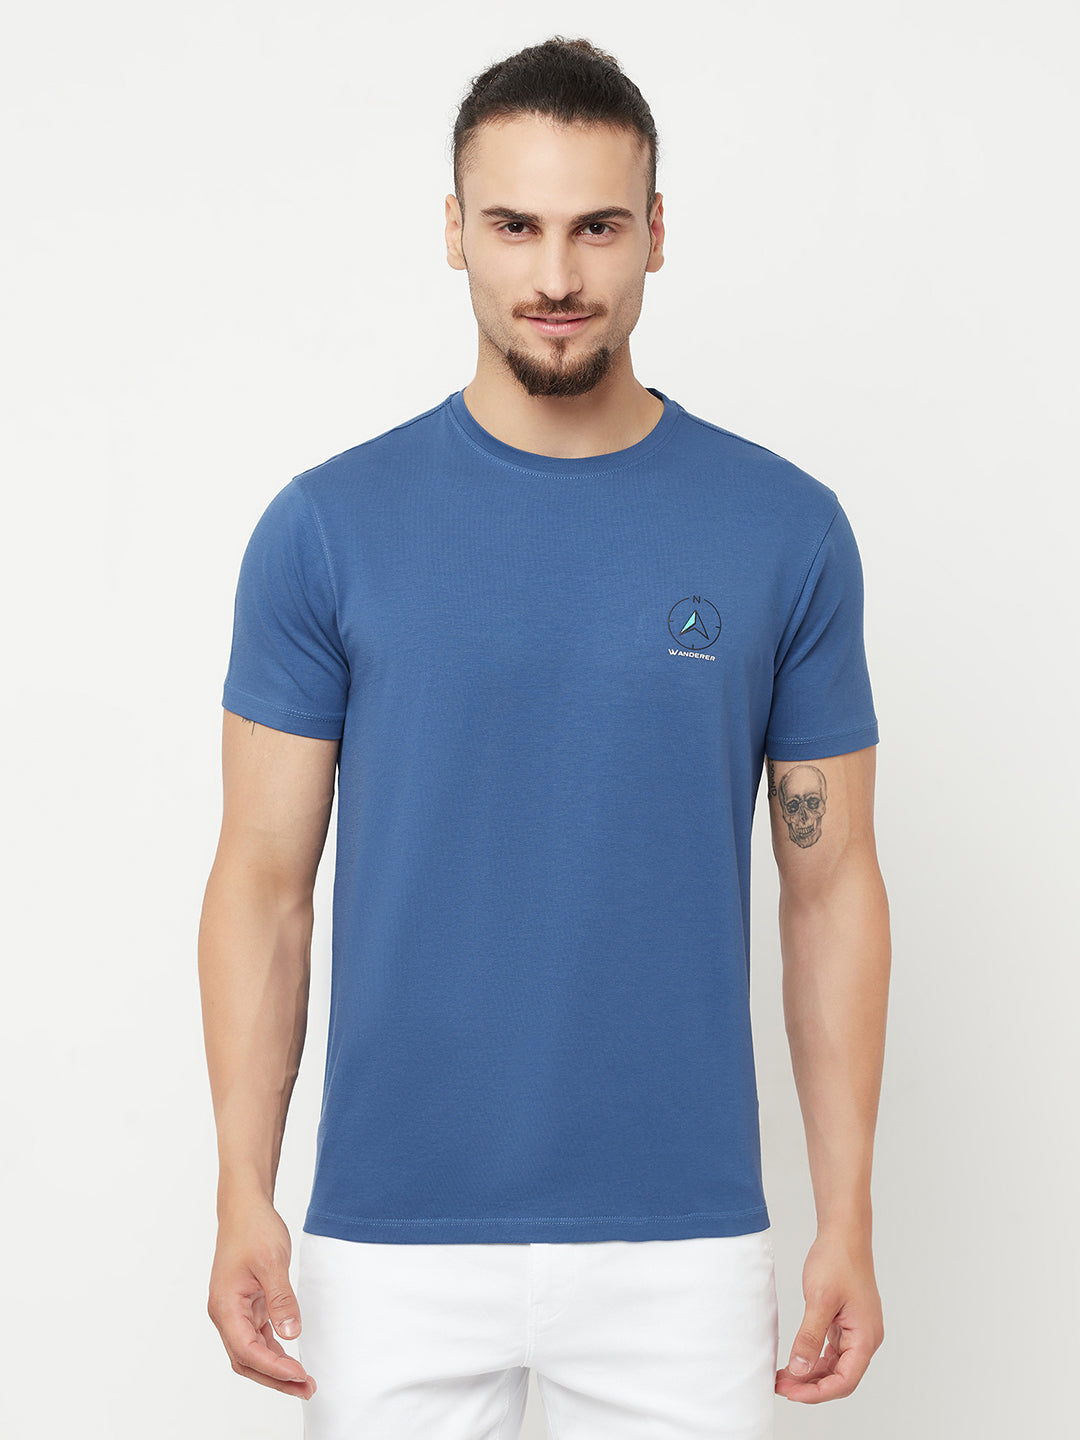 Blue Round Neck T-Shirt - Men T-Shirts